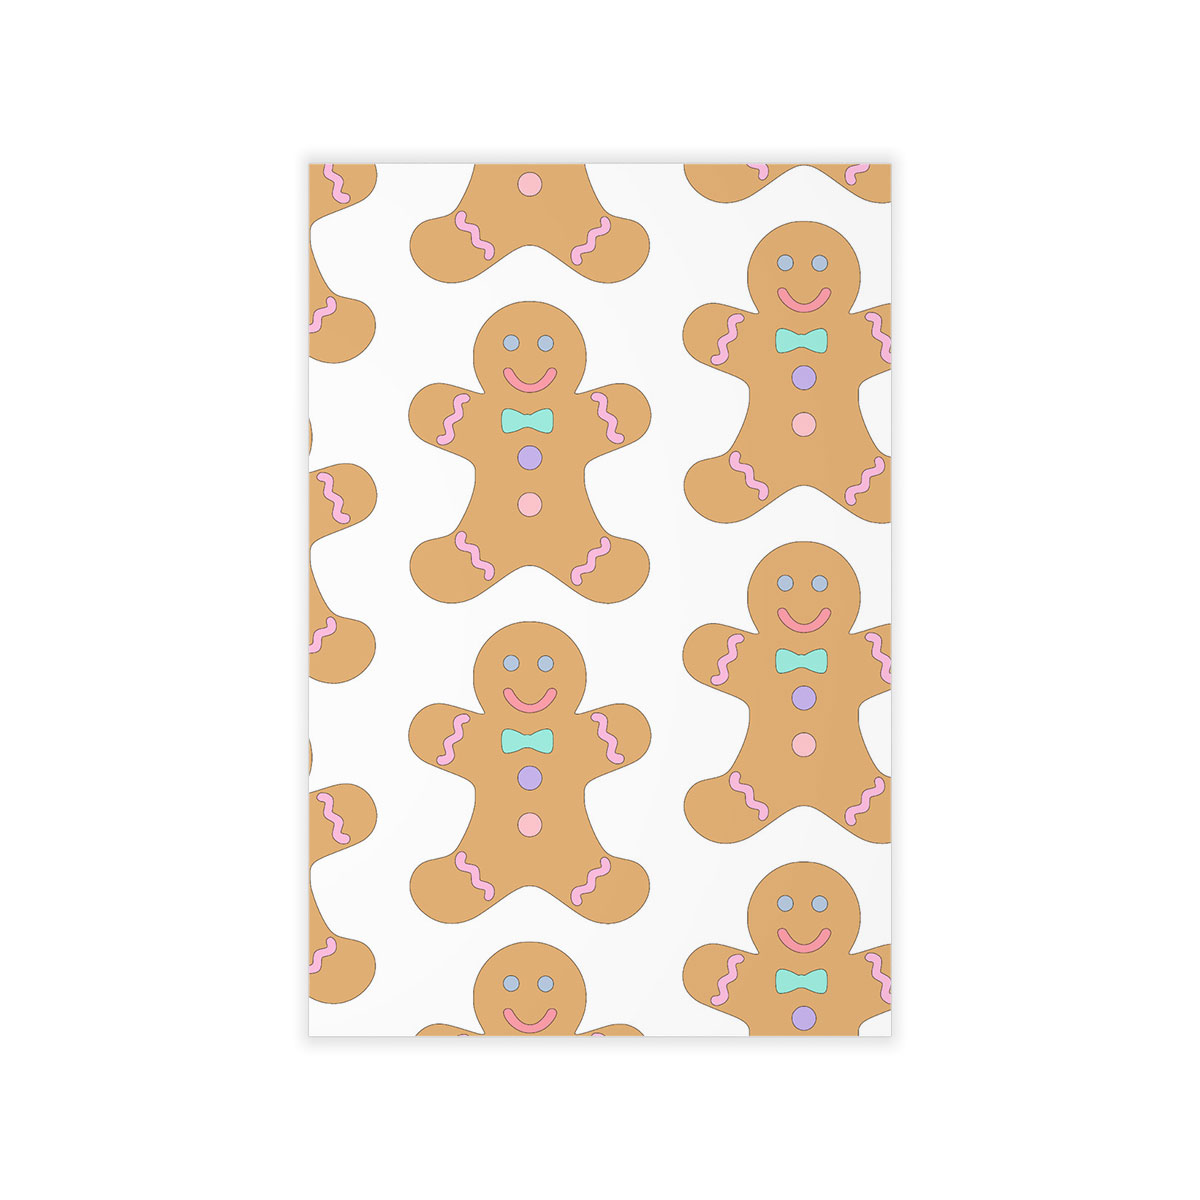 Cute Gingerbread Man Cookies Seamless Pattern Wall Decals